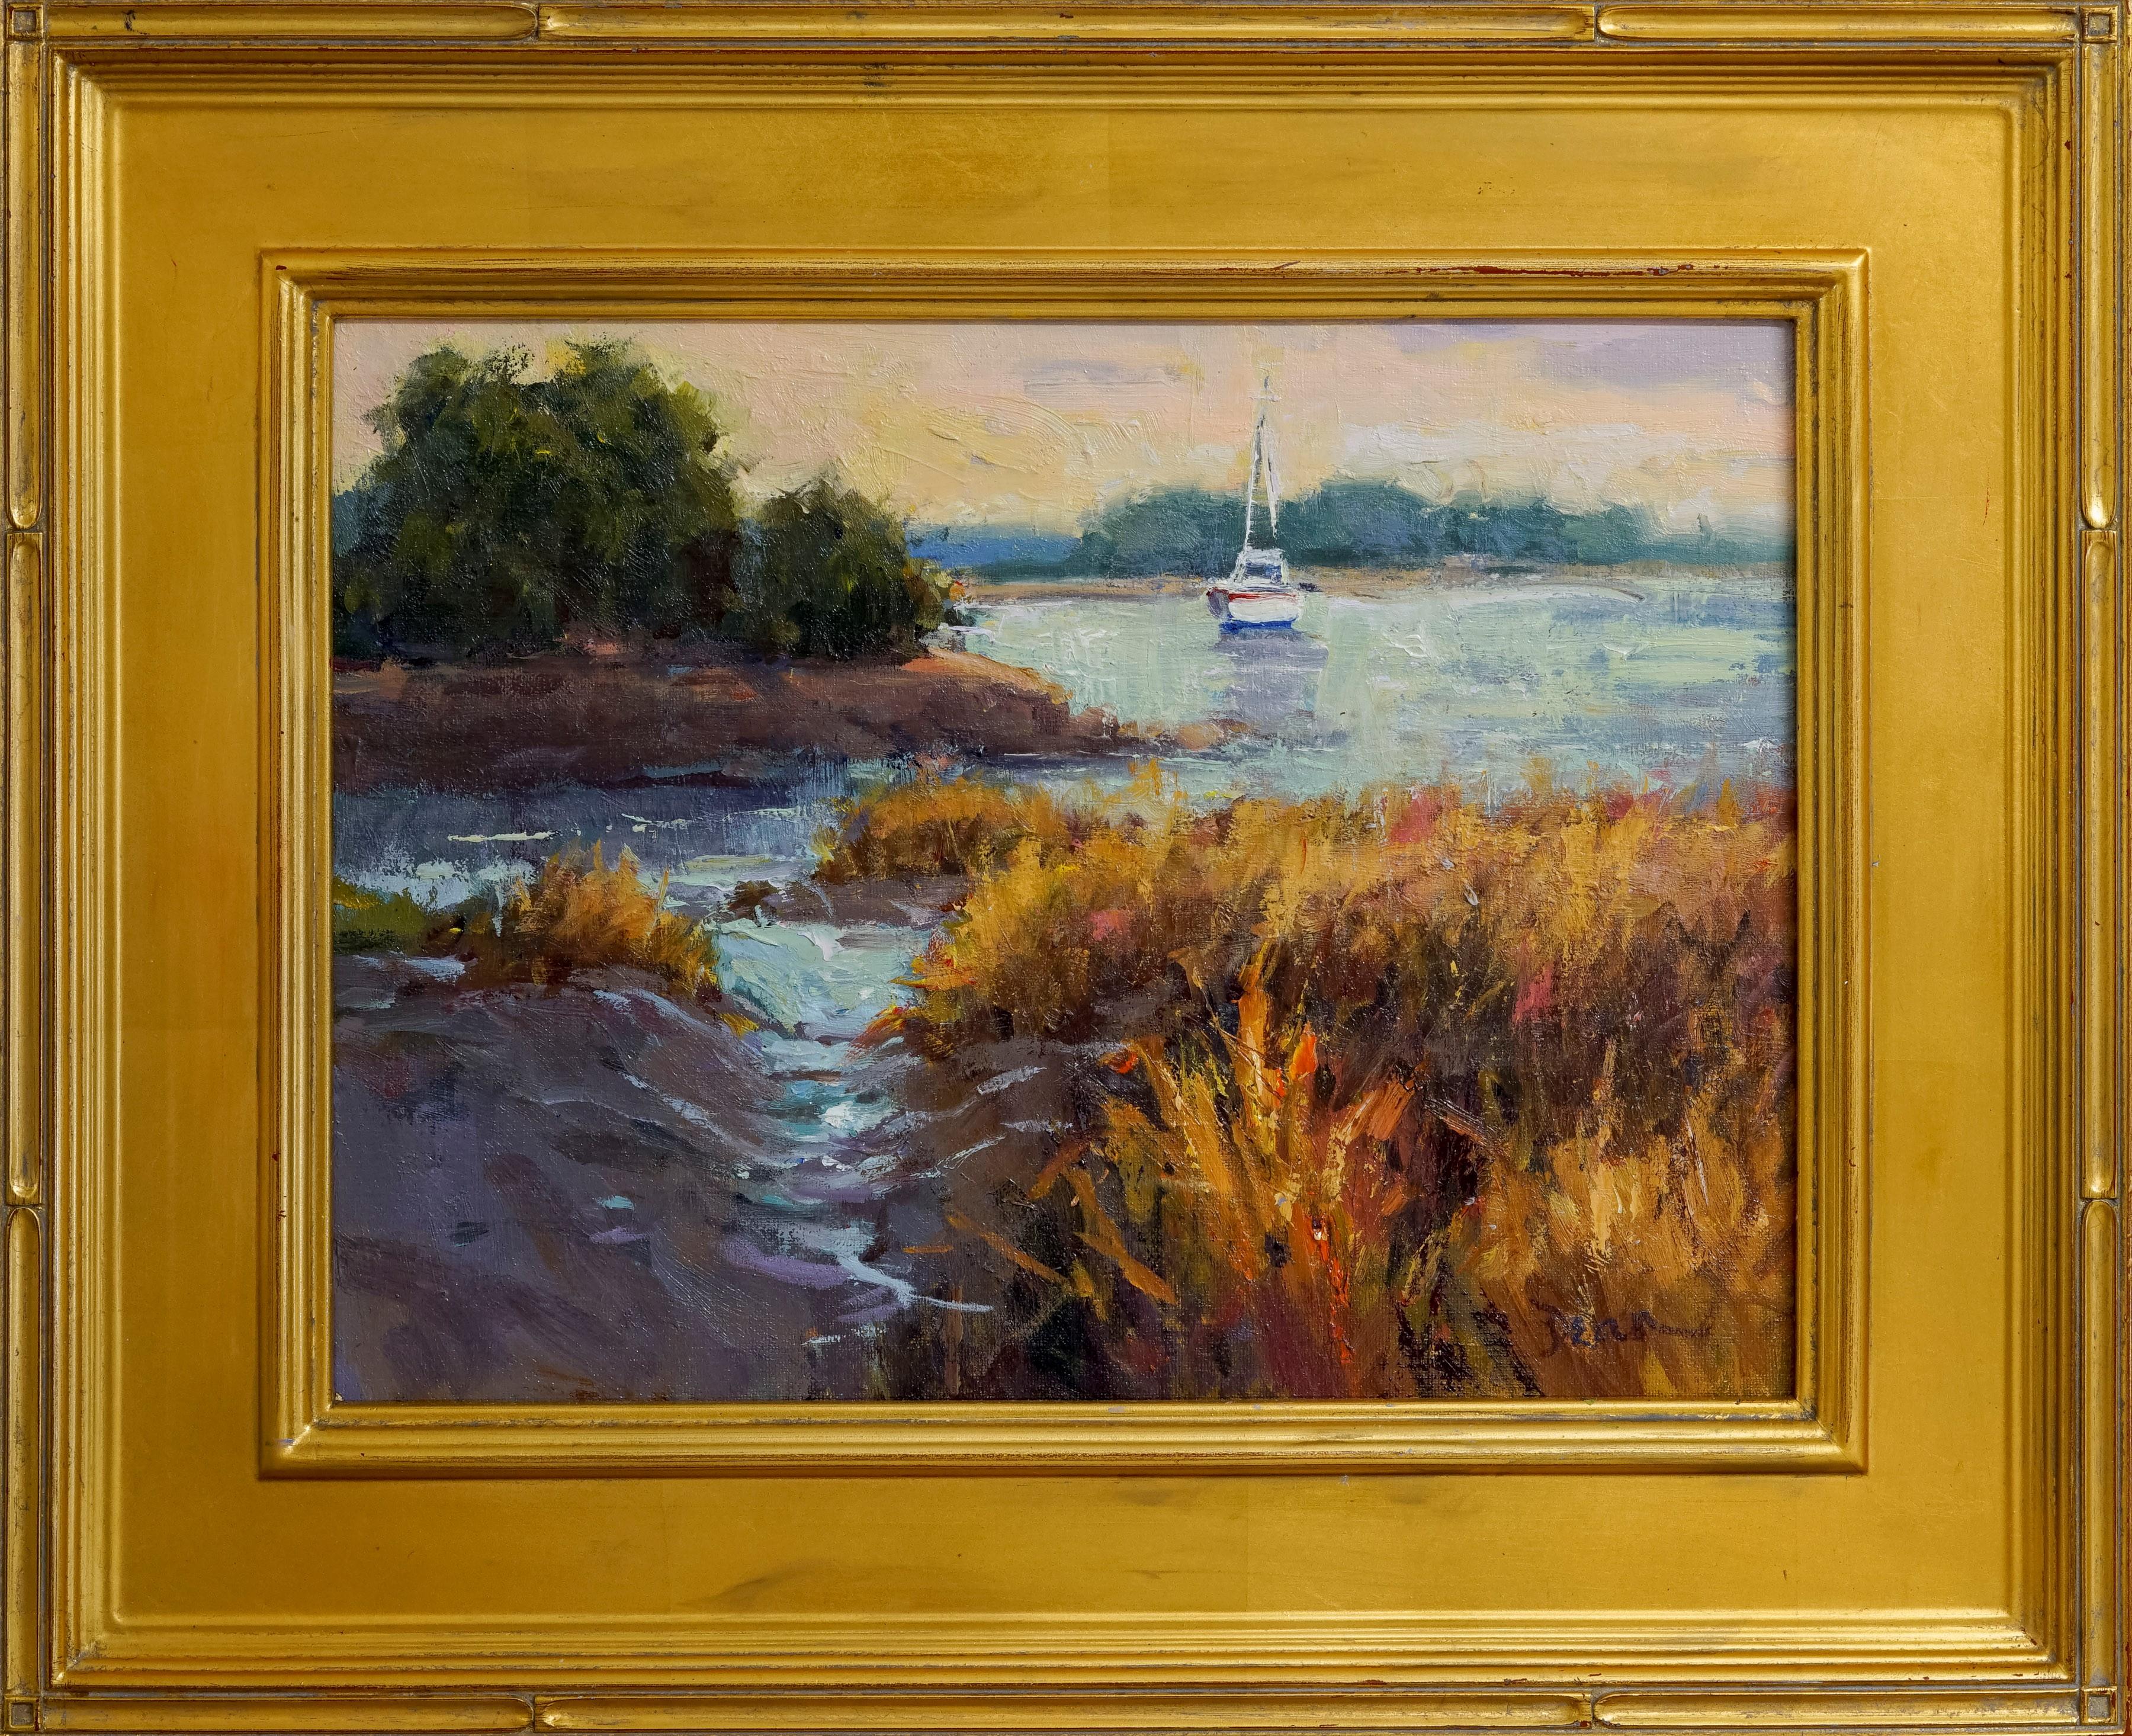 Dee Beard Dean Interior Painting - Safe Harbor, Plein Air Landscape Original Fine Art Gold Frame Oil on Linen Board